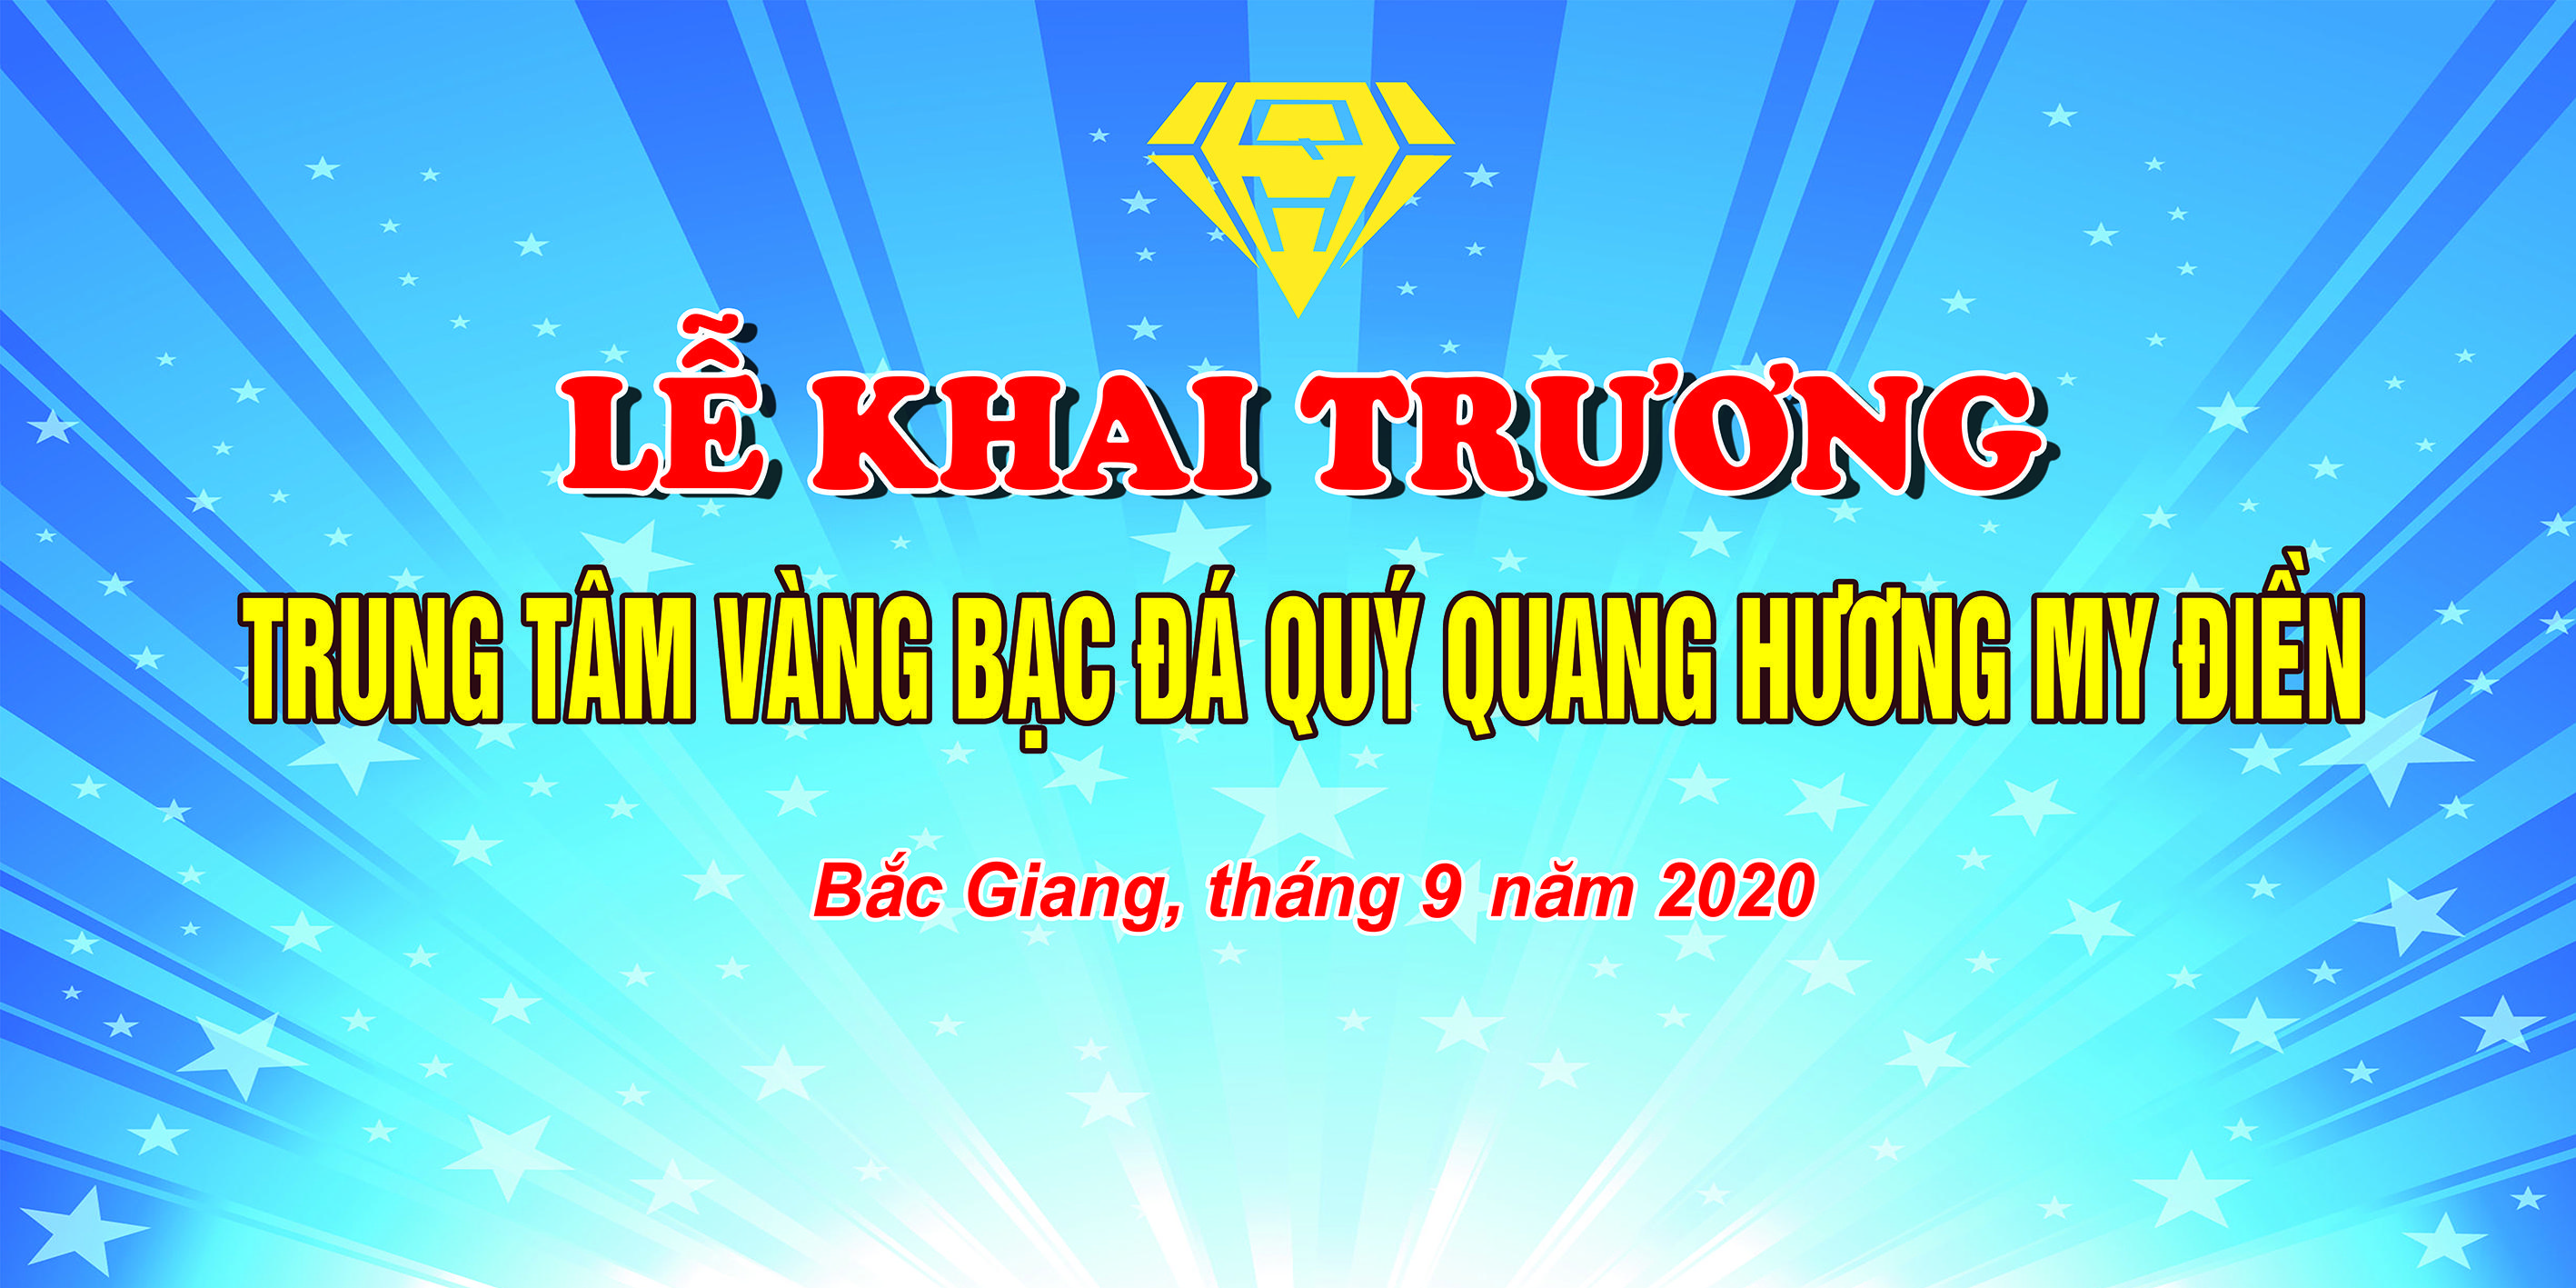 Le khai truong Trung tam vang bac da quy Quang Huong My Dien